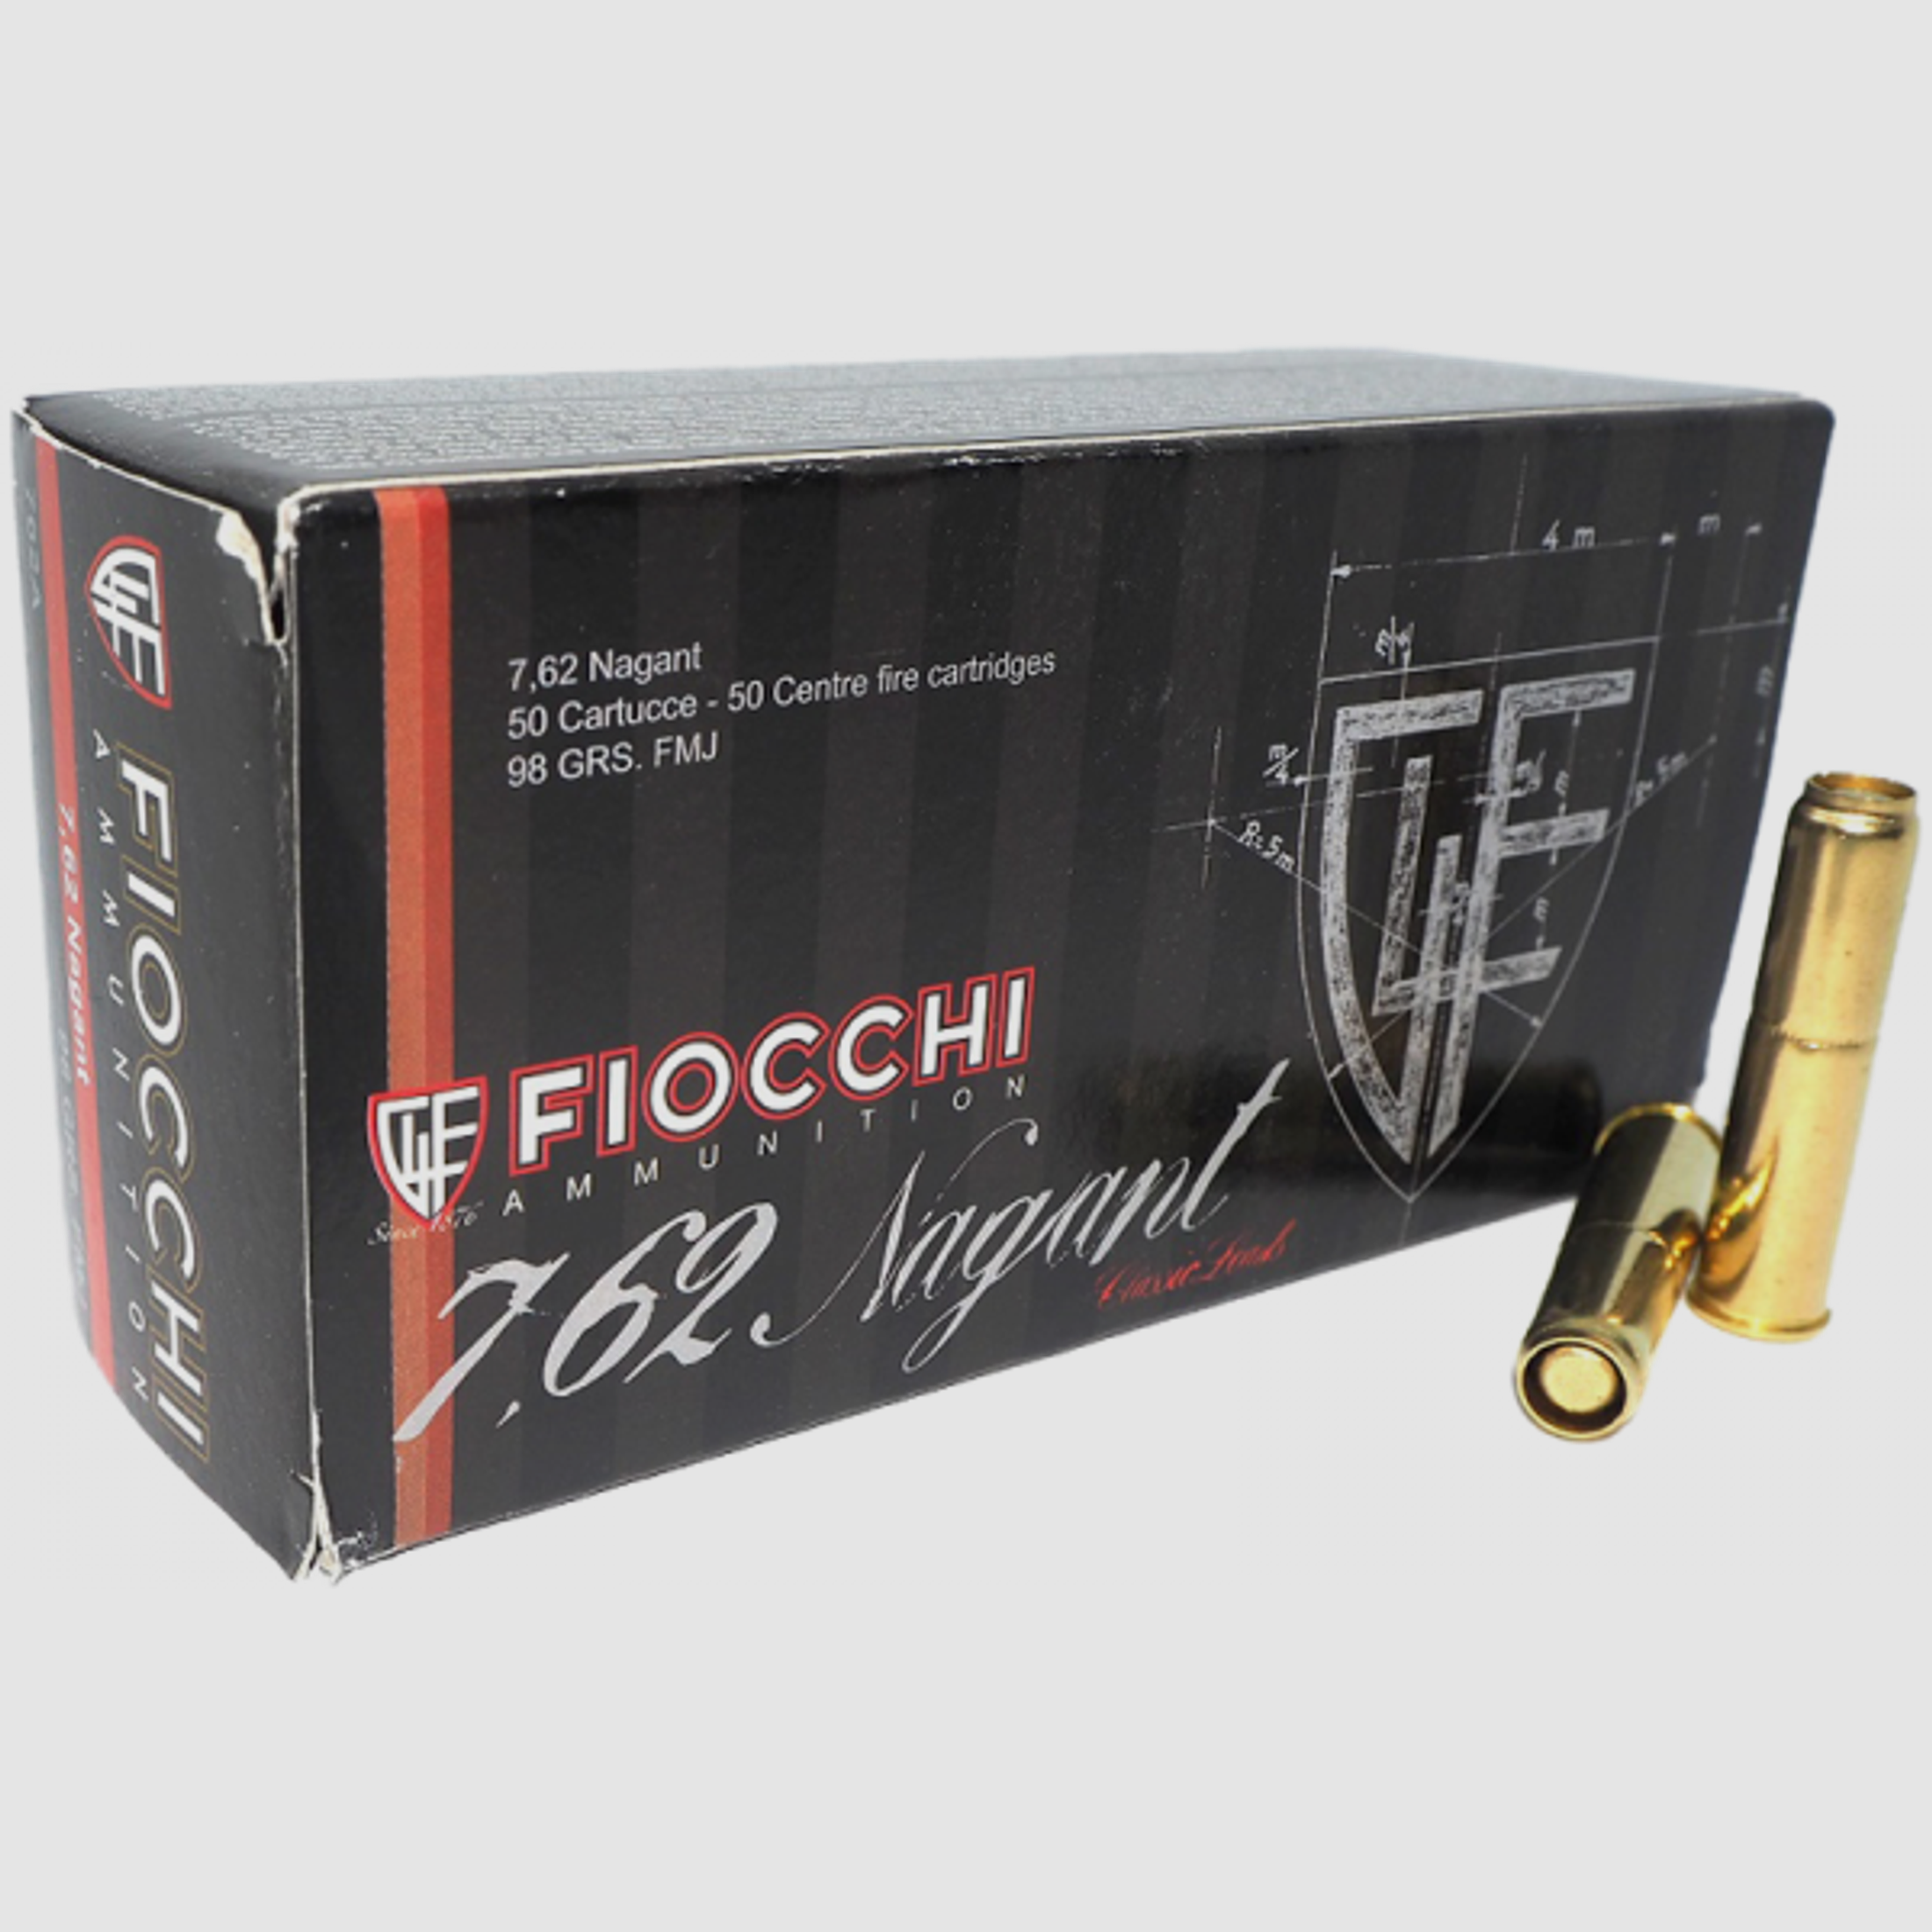 Fiocchi Old Time 7,62mm Nagant FMJ 98 grs Revolverpatronen